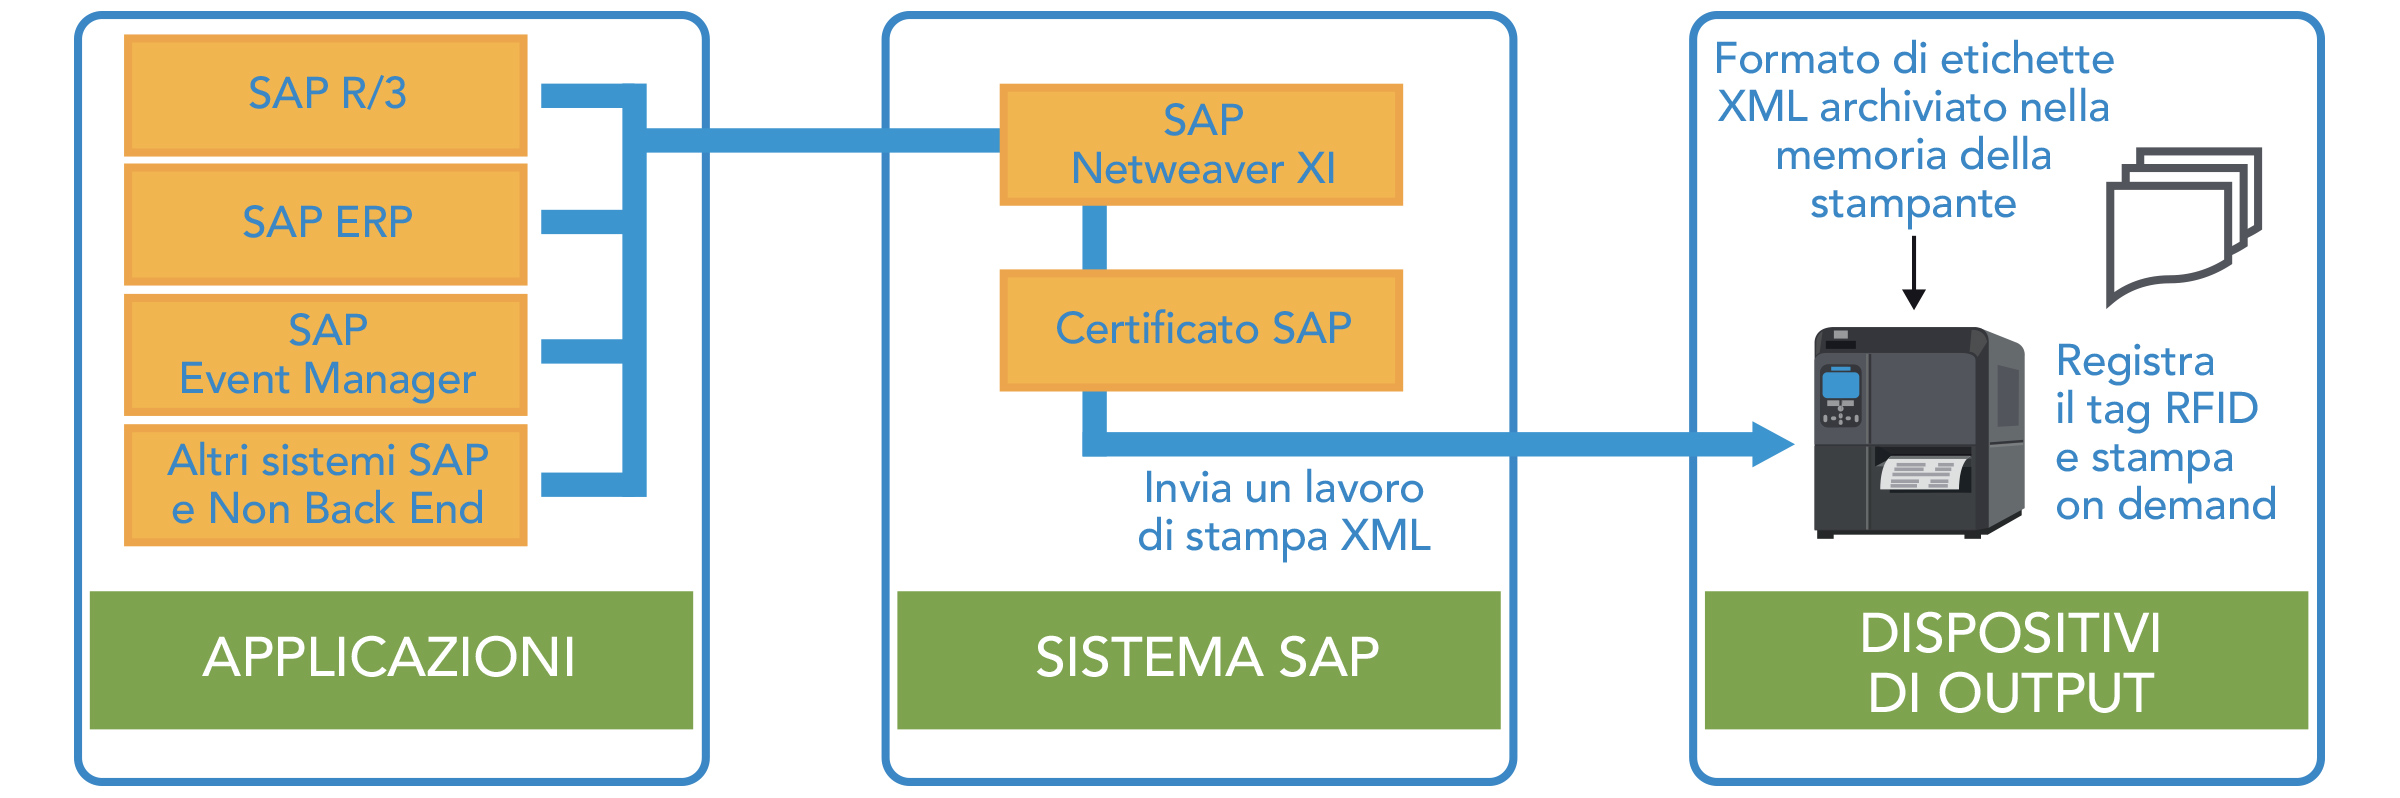 Applicazioni > Sistema SAP > Dispositivi di output